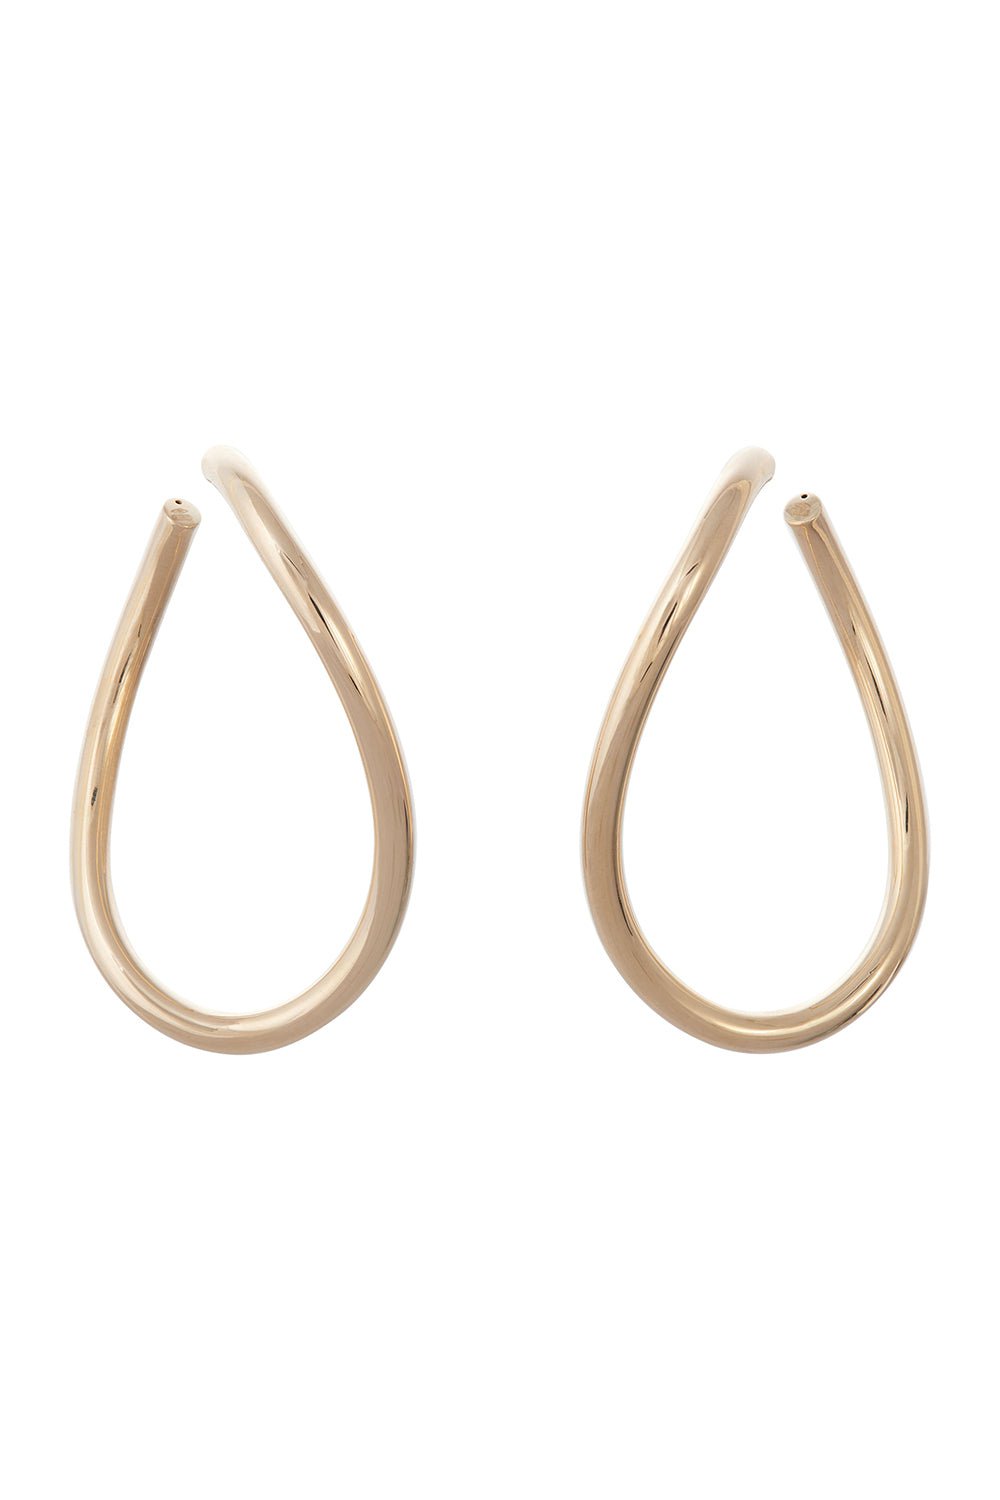 SIDNEY GARBER-Curved Opal Hoop Earrings-YELLOW GOLD